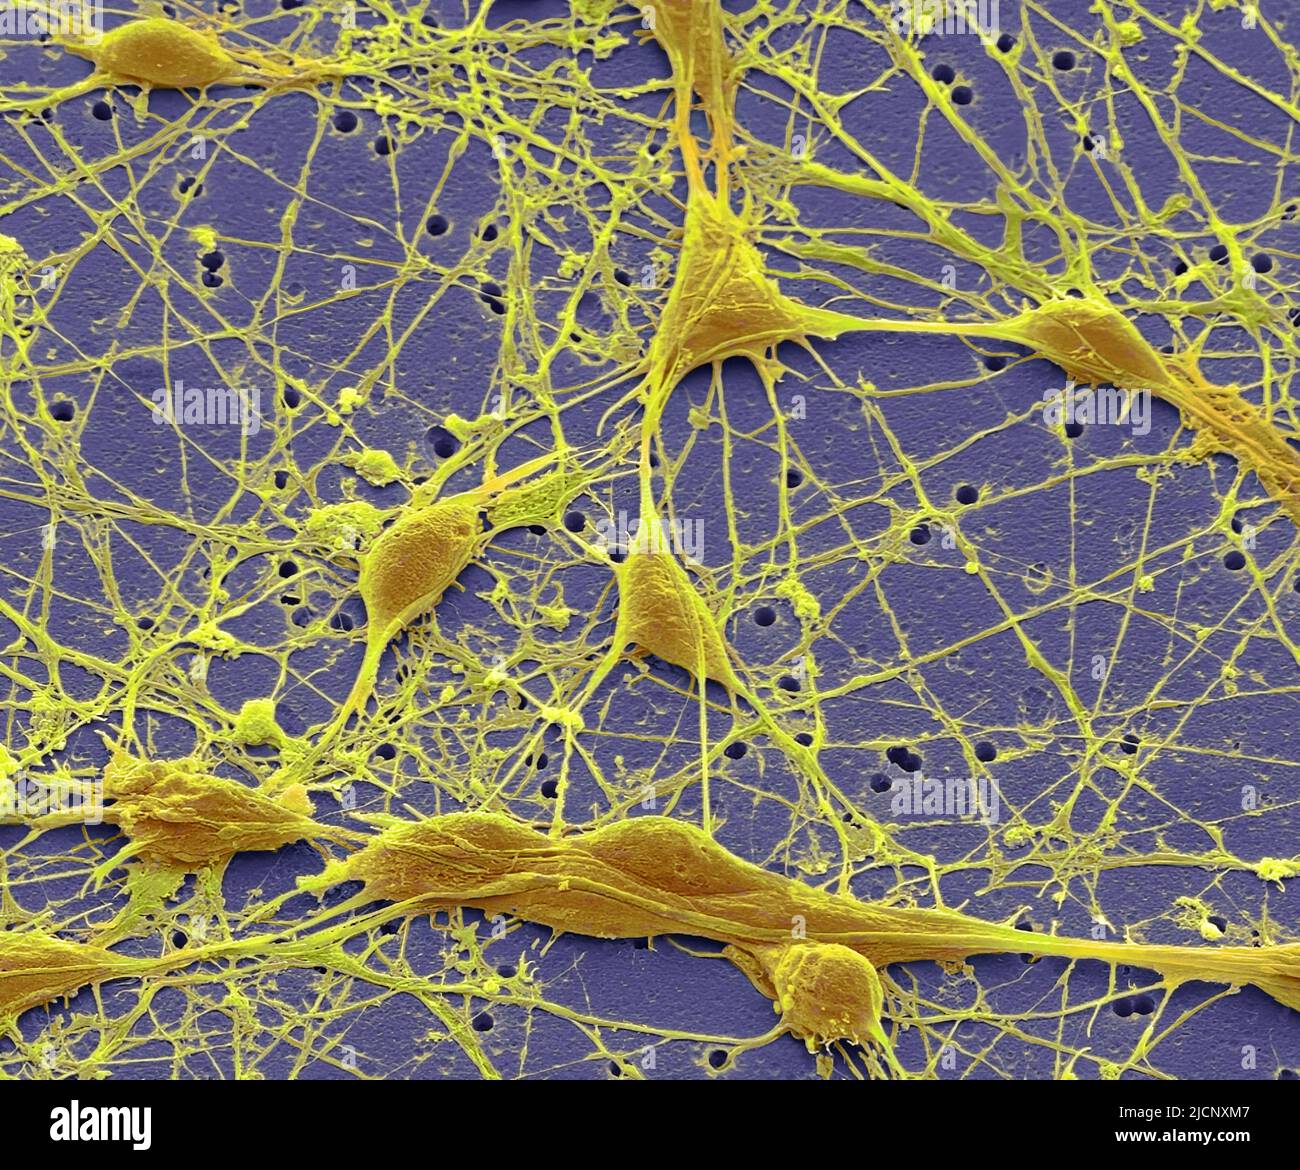 Neuronas derivadas pluripotentes. Micrografía electrónica de barrido en  color (SEM). Las neuronas humanas creadas a partir de células madre  pluripotentes inducidas (IPSCs) a través de la sobreexpresión de Neurogenin  2 (Ngn2) se